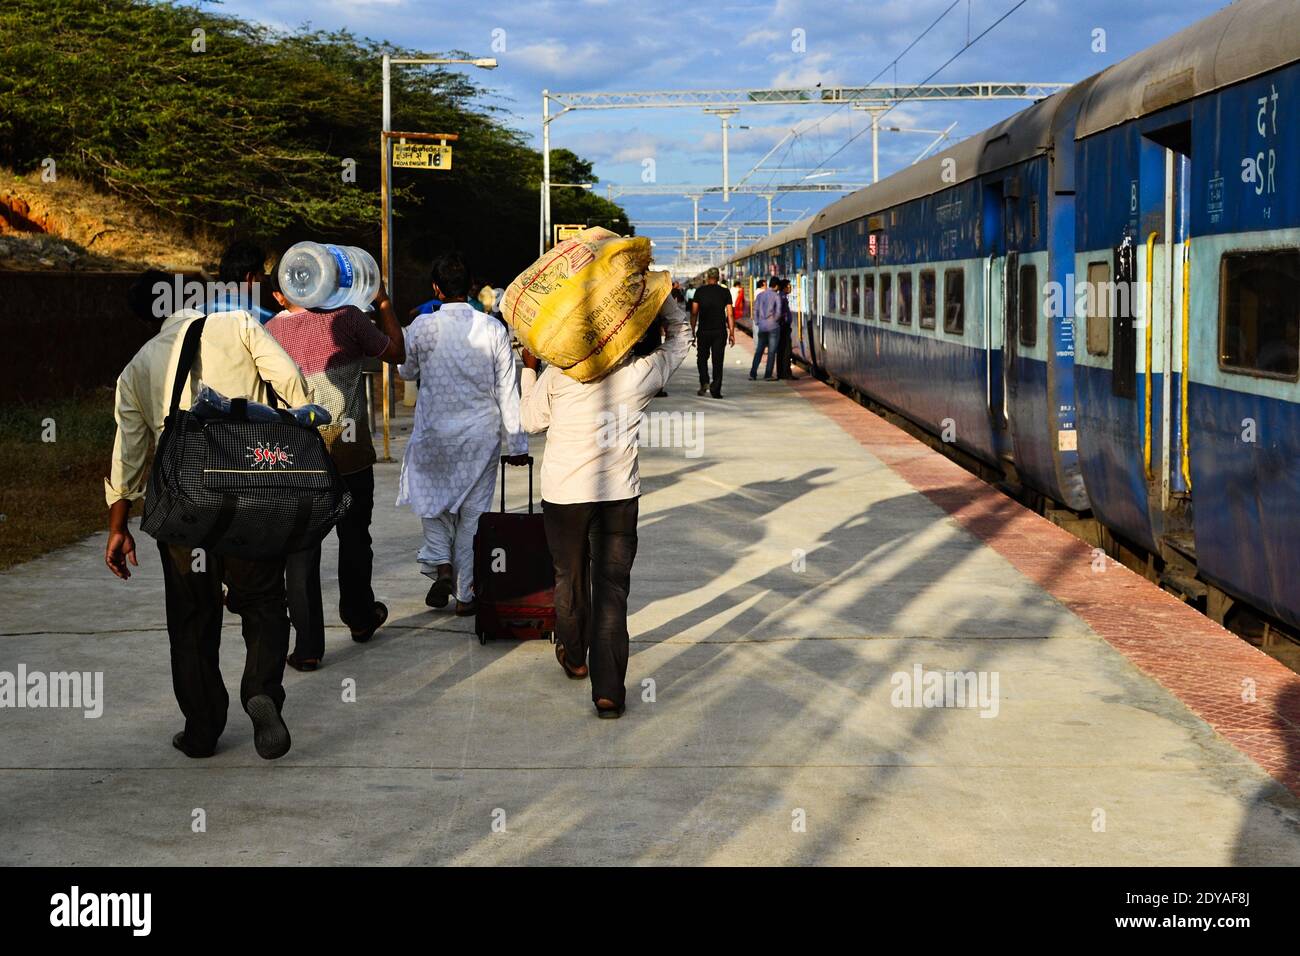 Kanyakumari, Tamil Nadu, India - January, 2017: Group of Indian men walk on platform carrying heavy bags before departure train on the railway station Stock Photo